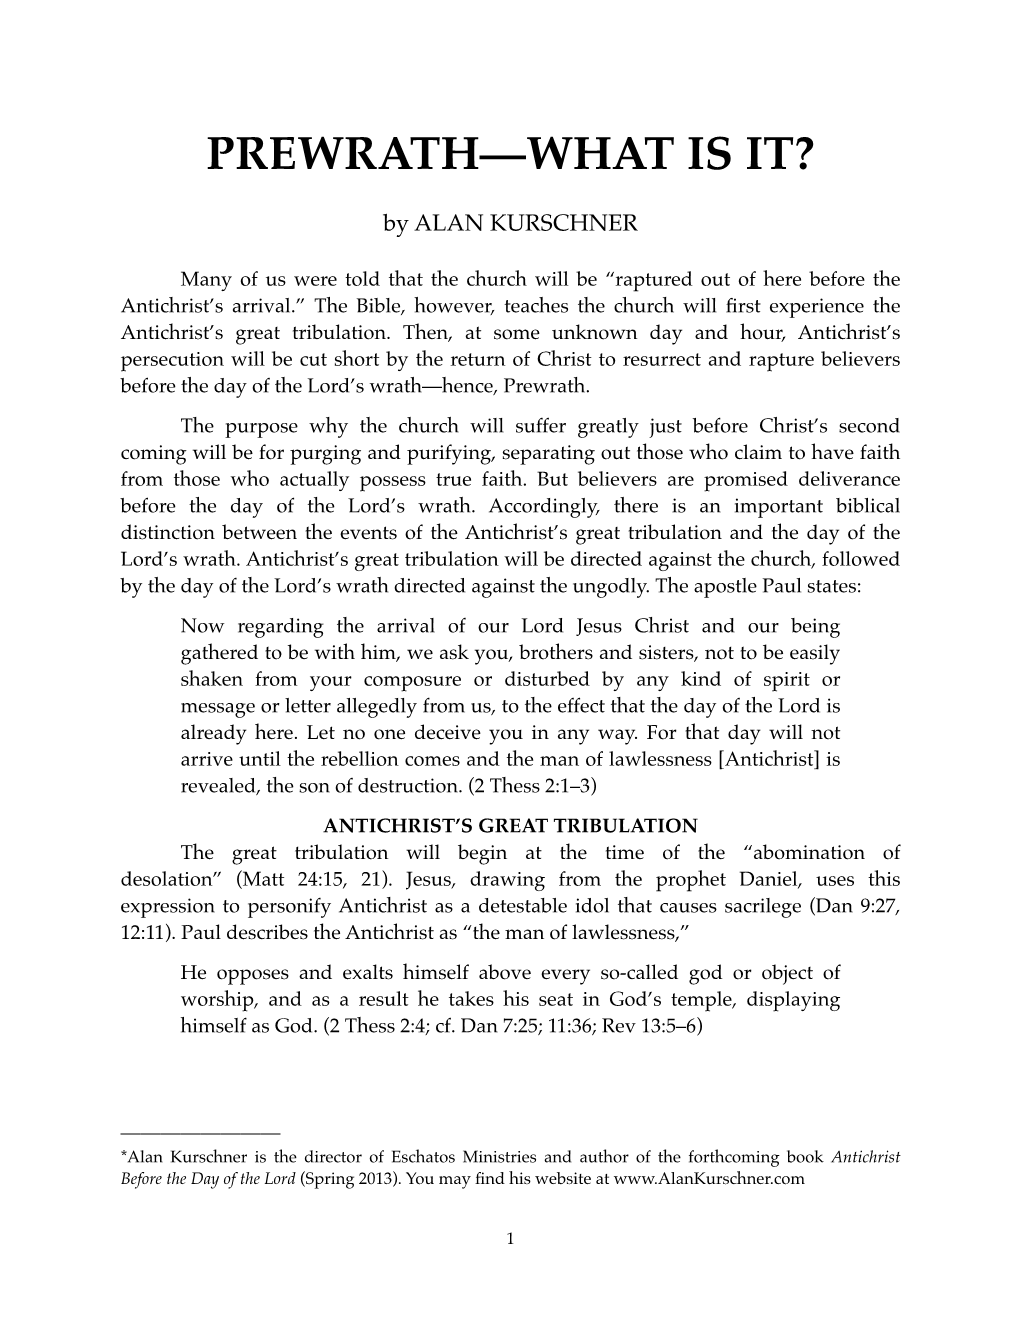 What Is Prewrath?